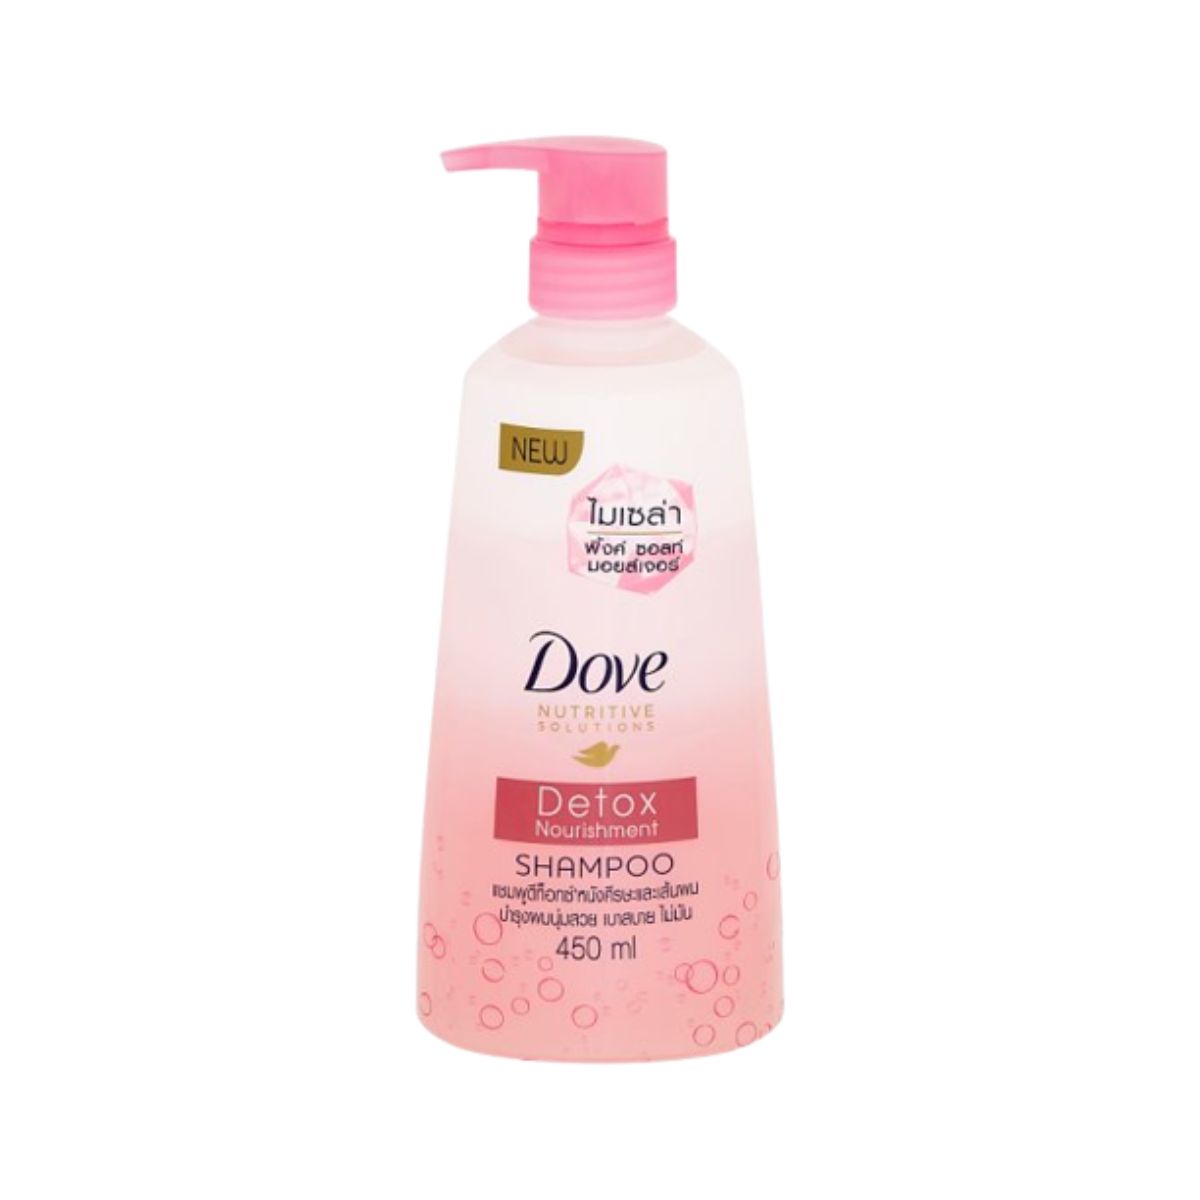 Dove Nutritive Solutions Detox Nourishment Shampoo - 450ml